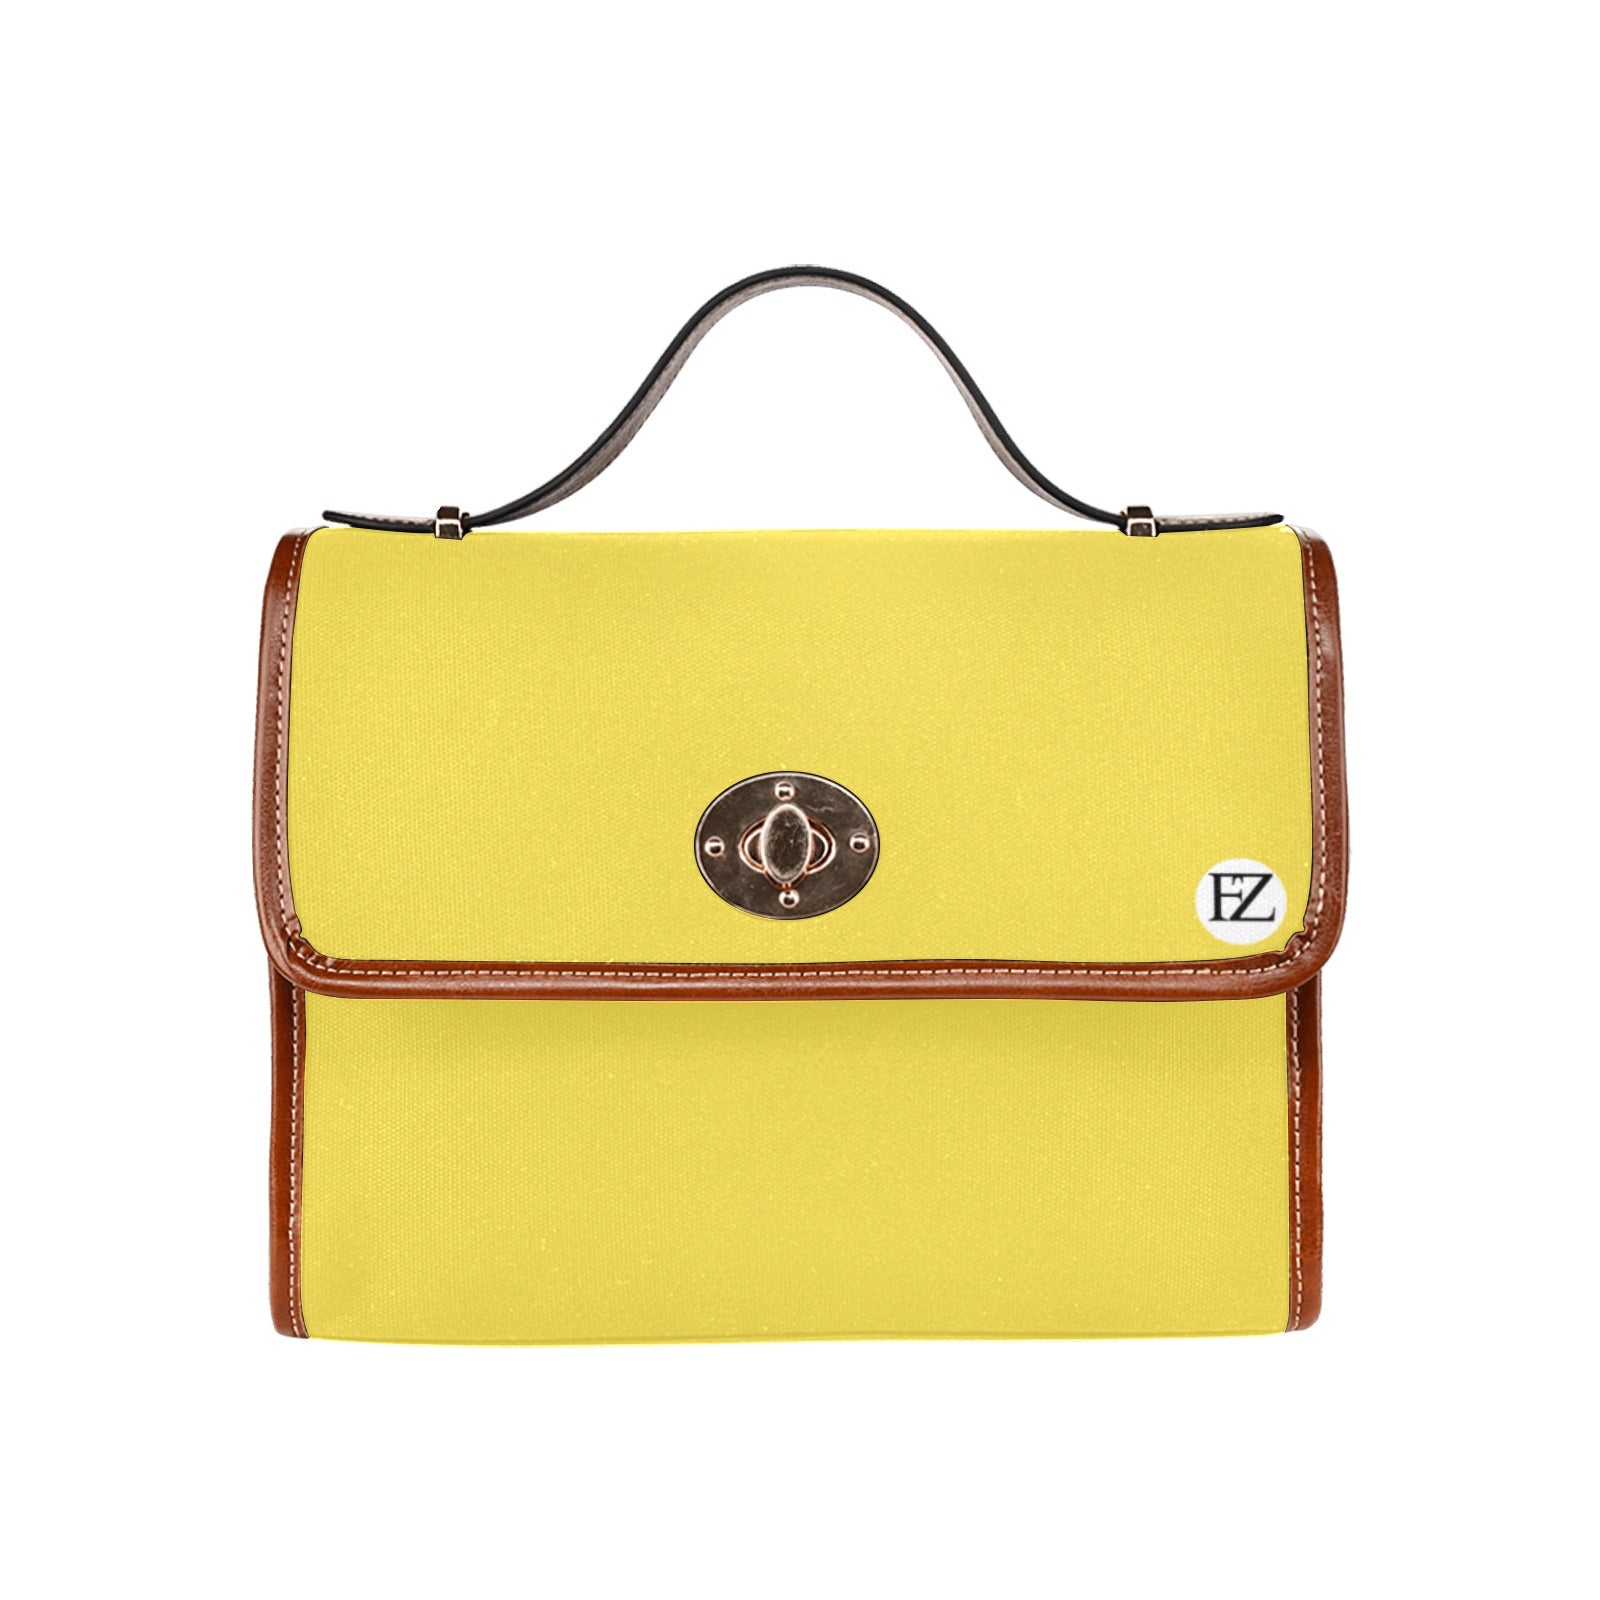 fz original handbag one size / fz - yellow all over print waterproof canvas bag(model1641)(brown strap)